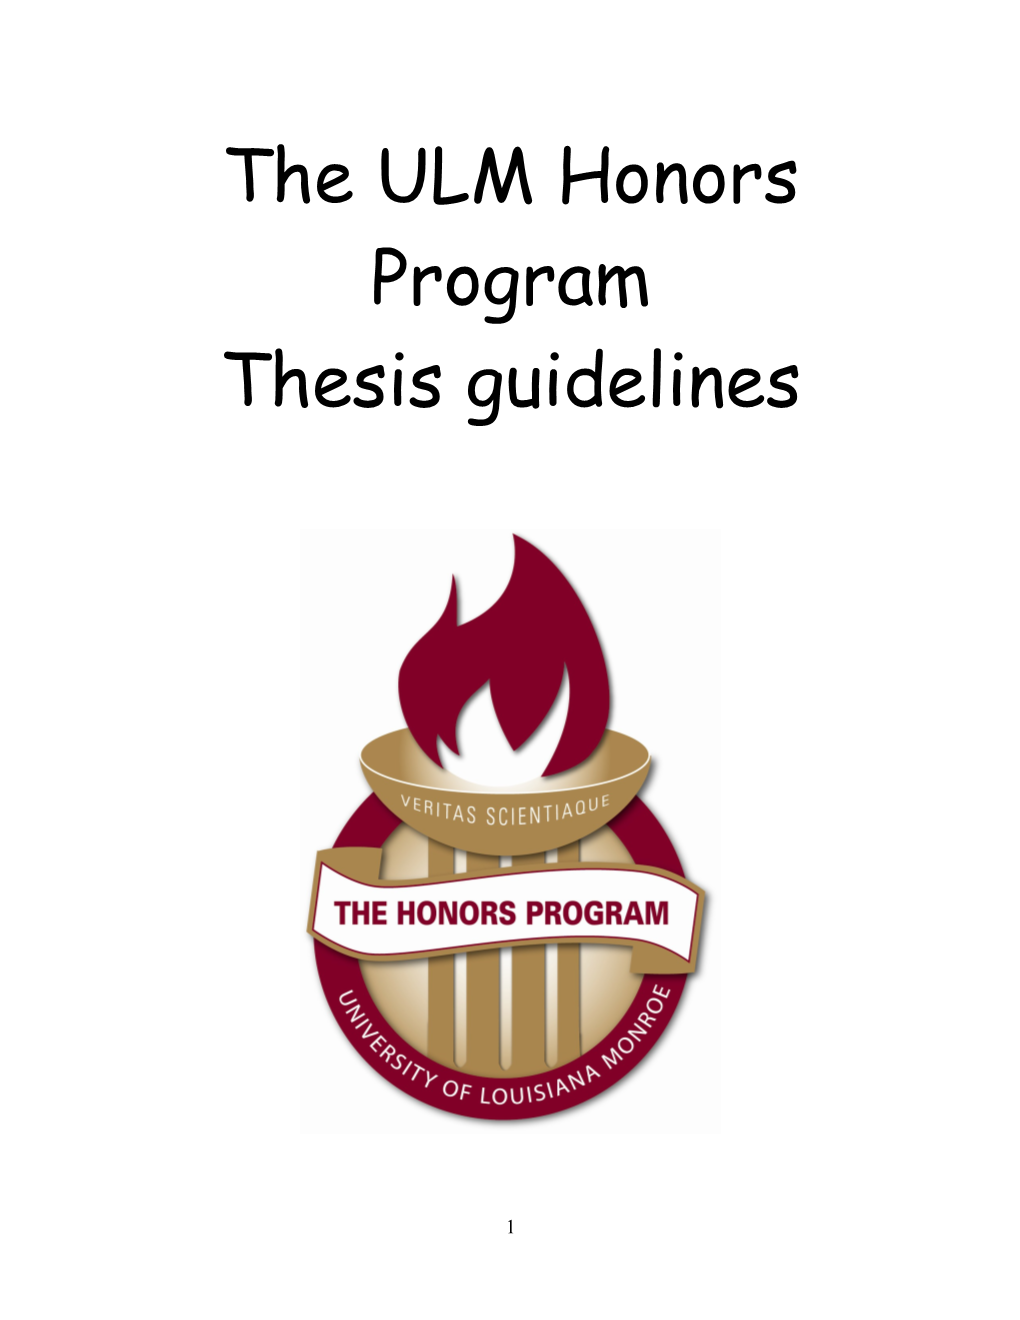 The ULM Honors Program